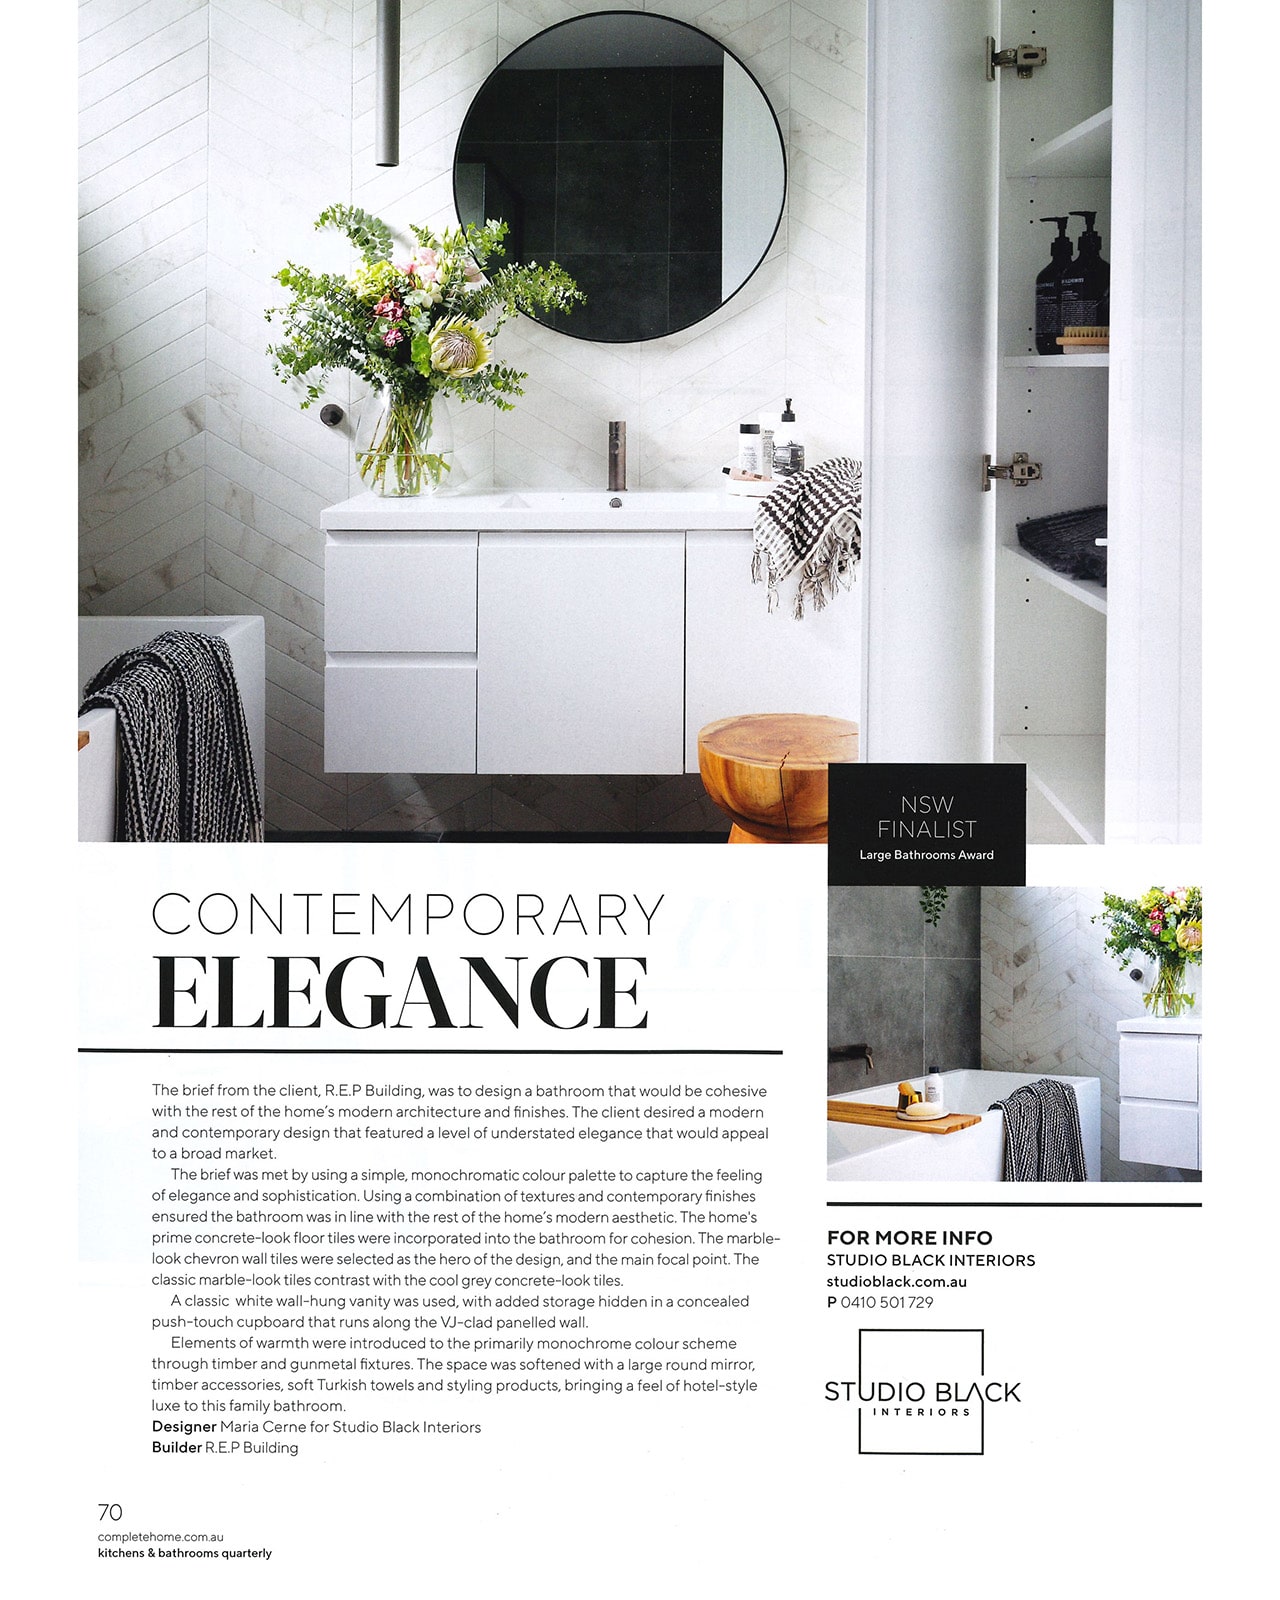 Studio Black Interiors featured in Kitchens and Bathrooms Quarterly Magazine.